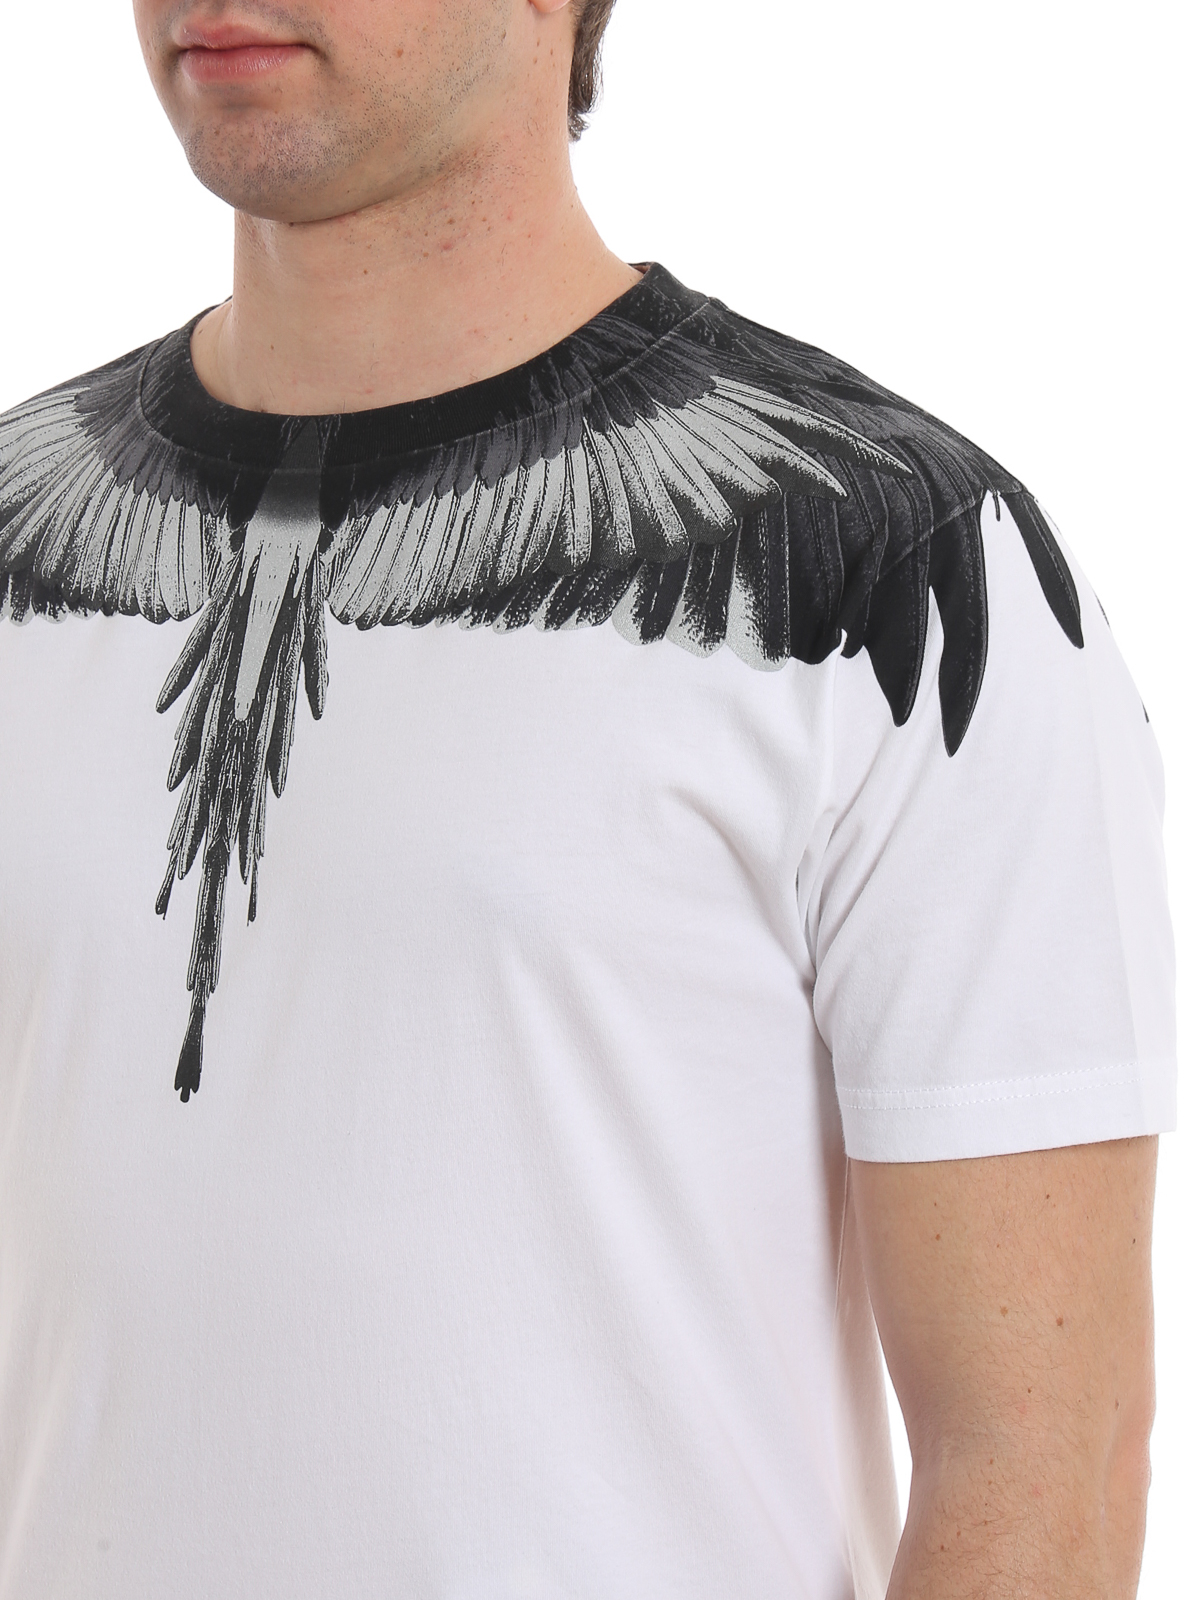 Grape Mona Lisa bekræft venligst T-shirts Marcelo Burlon - Wings white T-shirt - CMAA018R190010180191